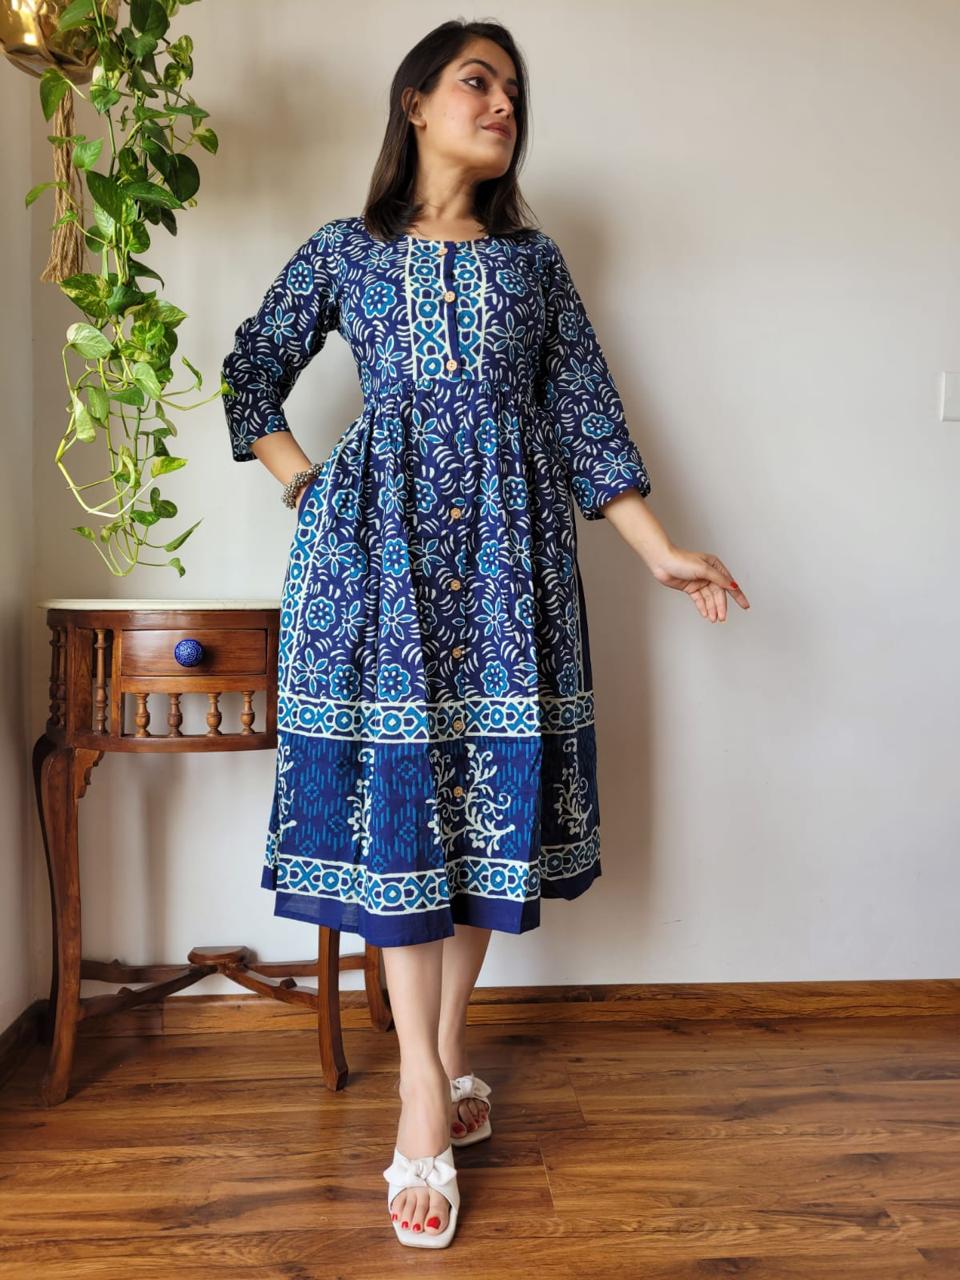 Picnic dress for girls blue bagru print dress for summer 